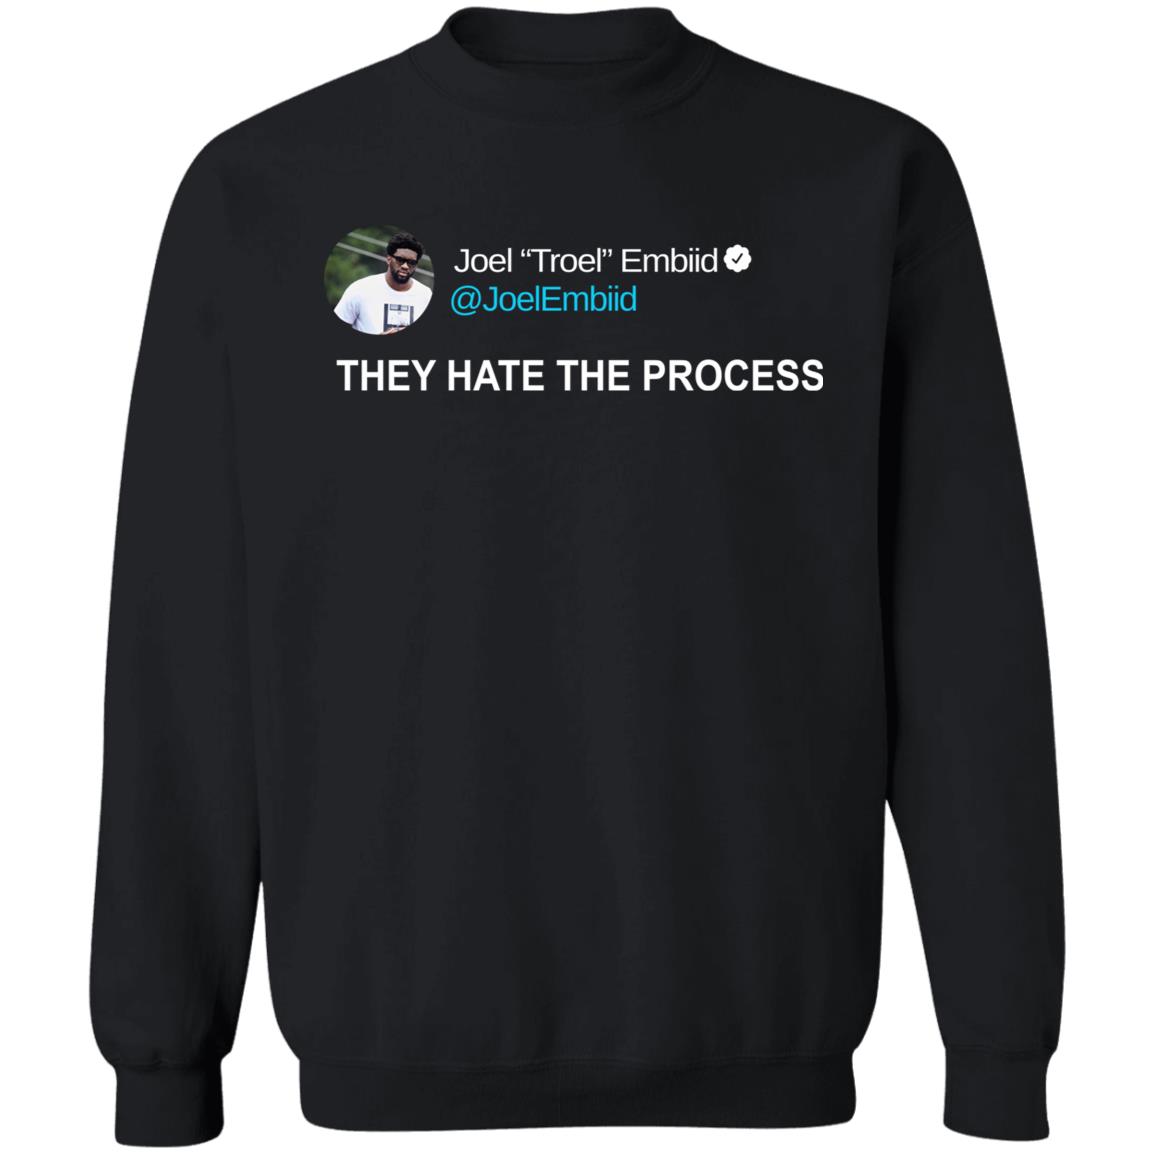 Joel Troel Embiid On Twitter They Hate The Process Shirt 2